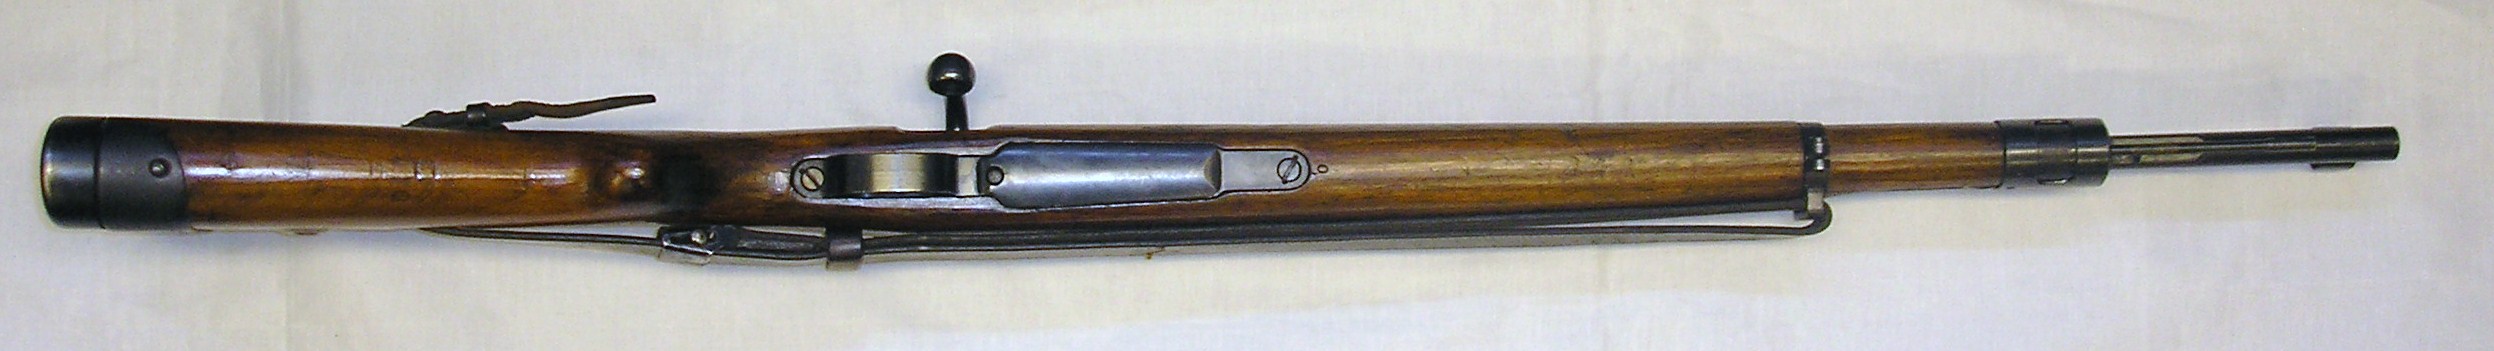 ./guns/rifle/bilder/Rifle-Kongsberg-Mauser-G3340-POLITI-1649-3.JPG